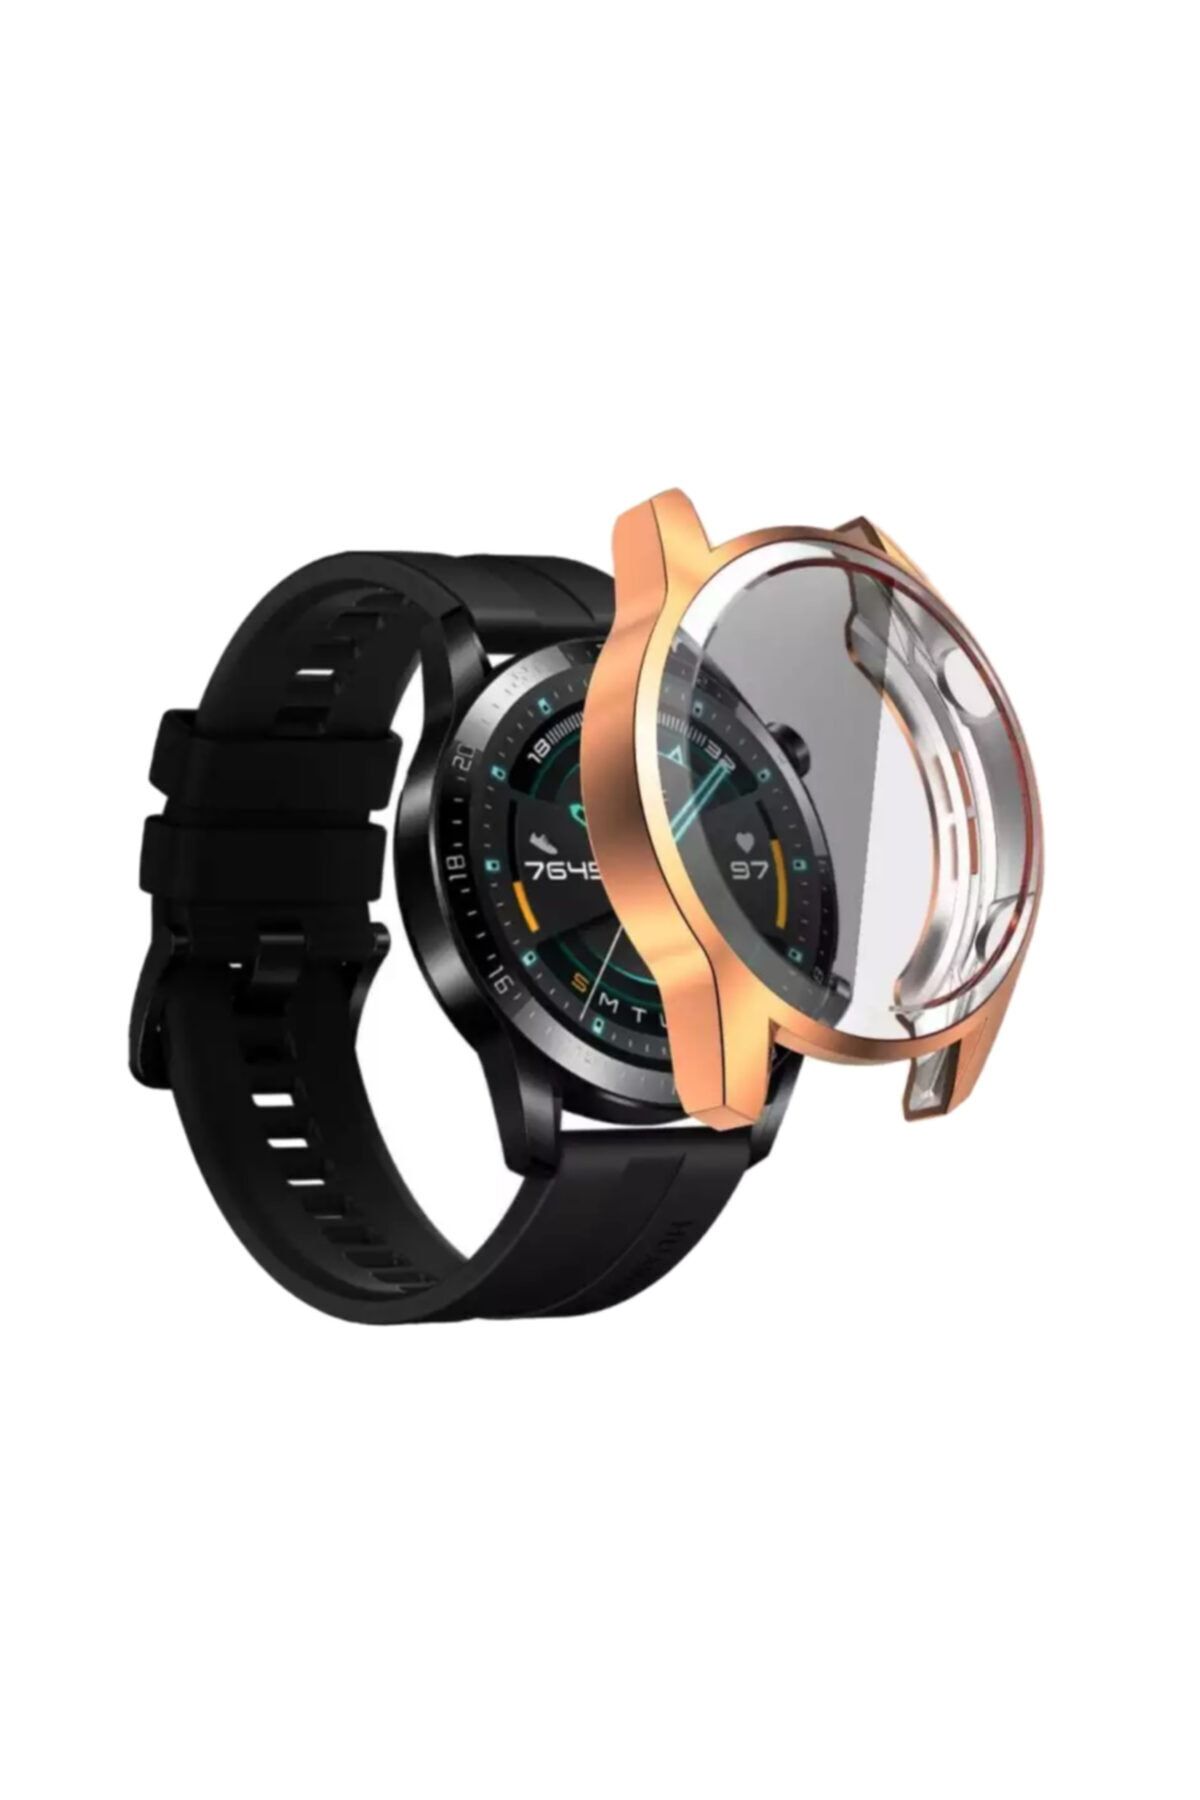 Genel Markalar Huawei Watch Akıllı Saat Gt Gt2 (46mm ) 360 Tam Kaplayan Silikon Kılıf Tam Kalite Renk:gold Rose